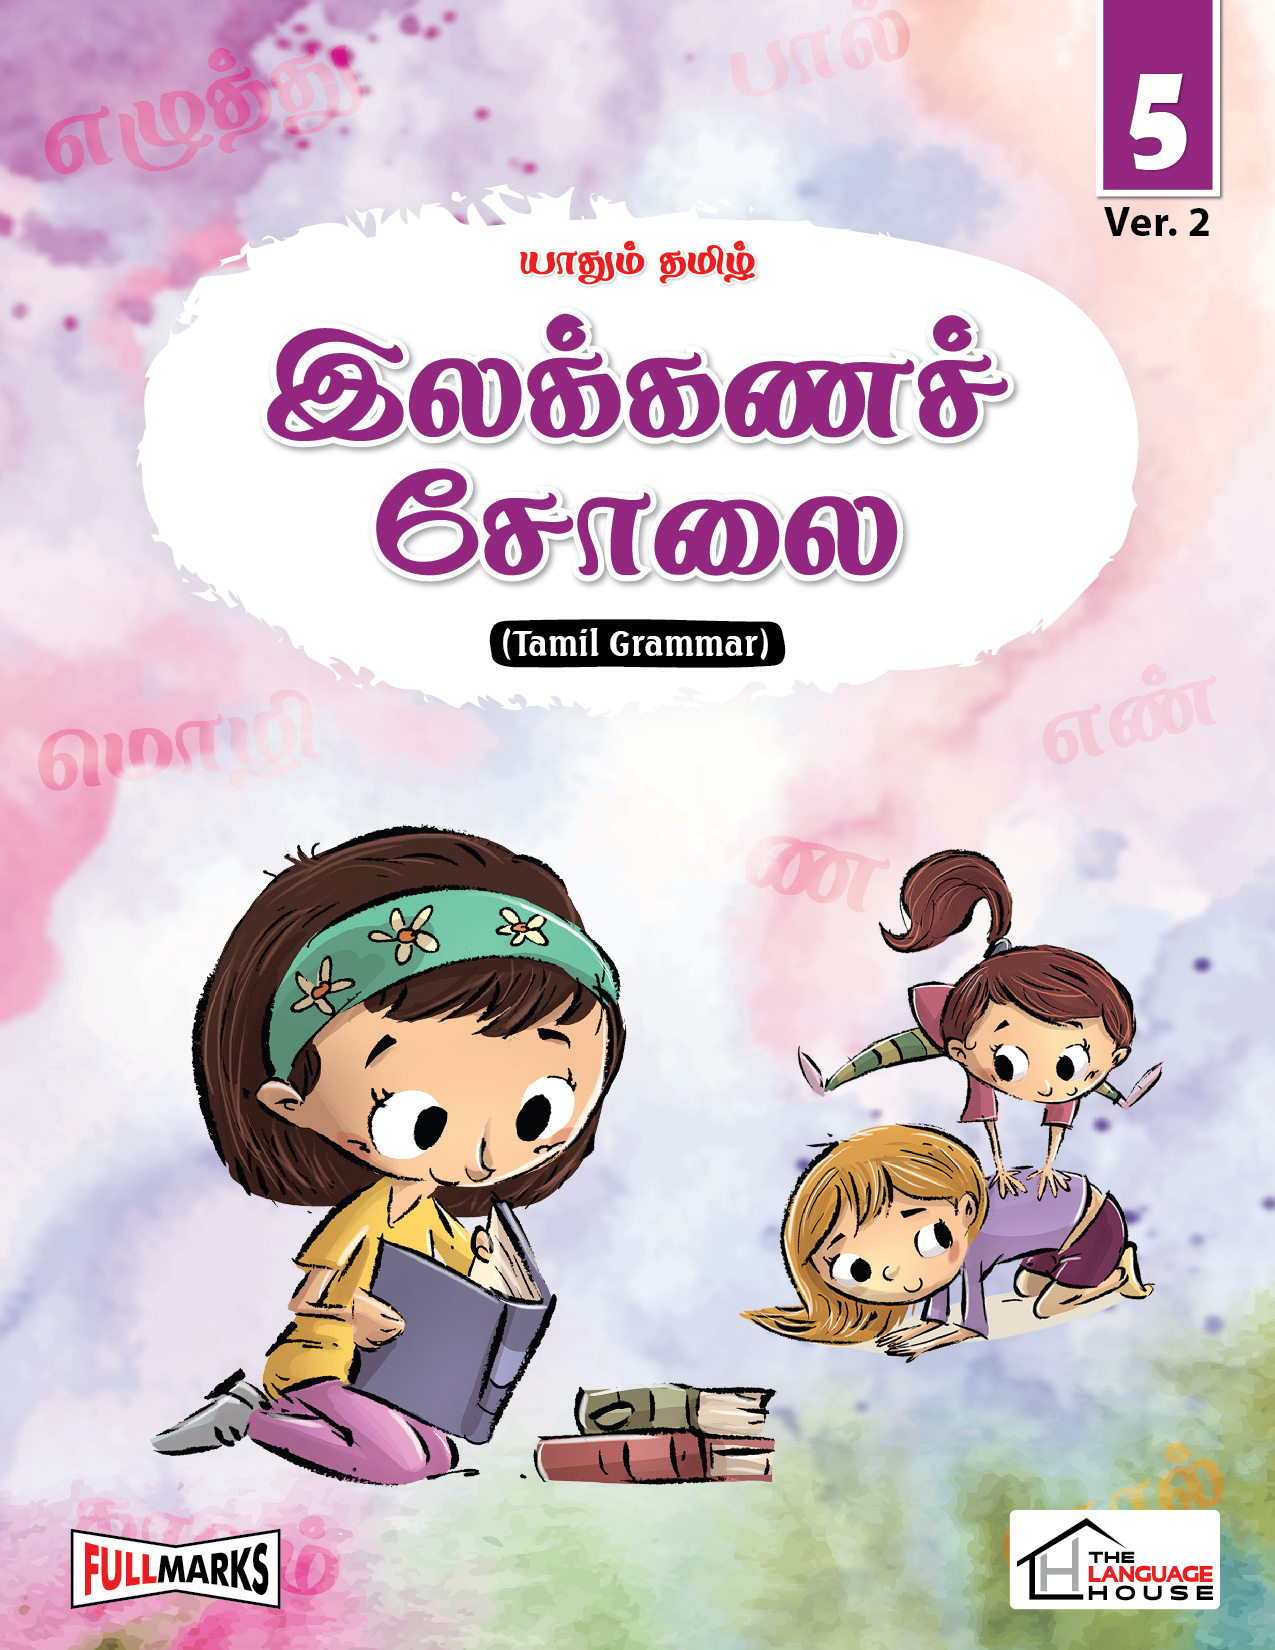 Tamil Grammar Ver. 2 Class 5